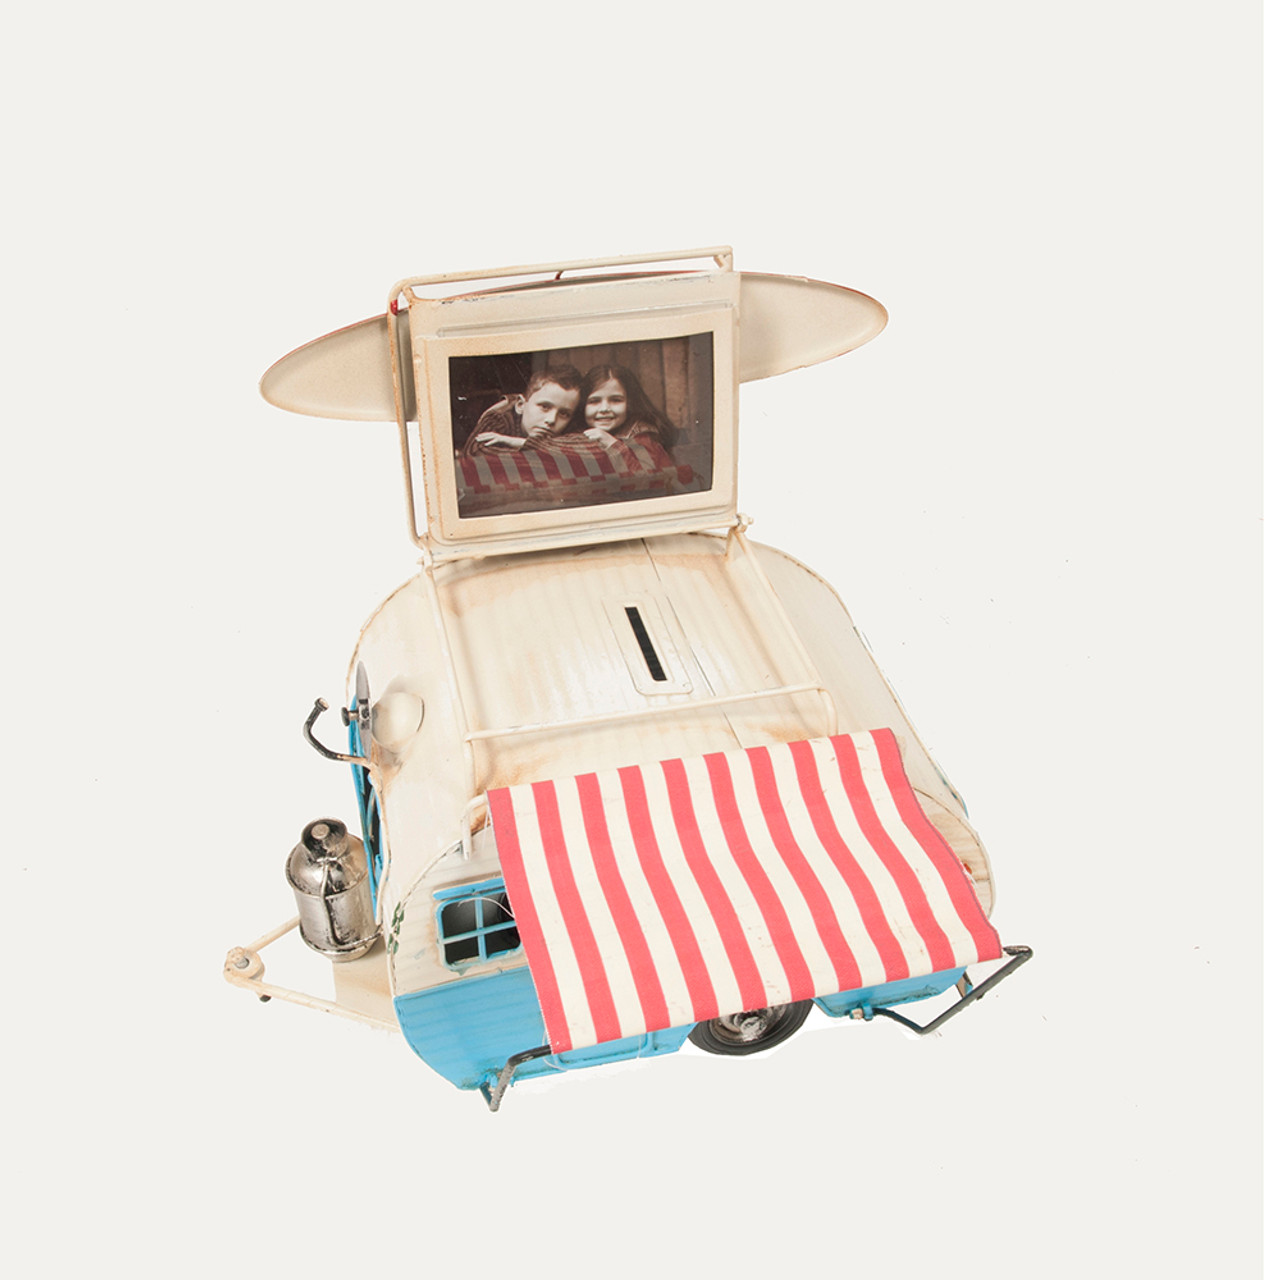 1960s Travel Camping Trailer Model Piggy Bank Photo Frame